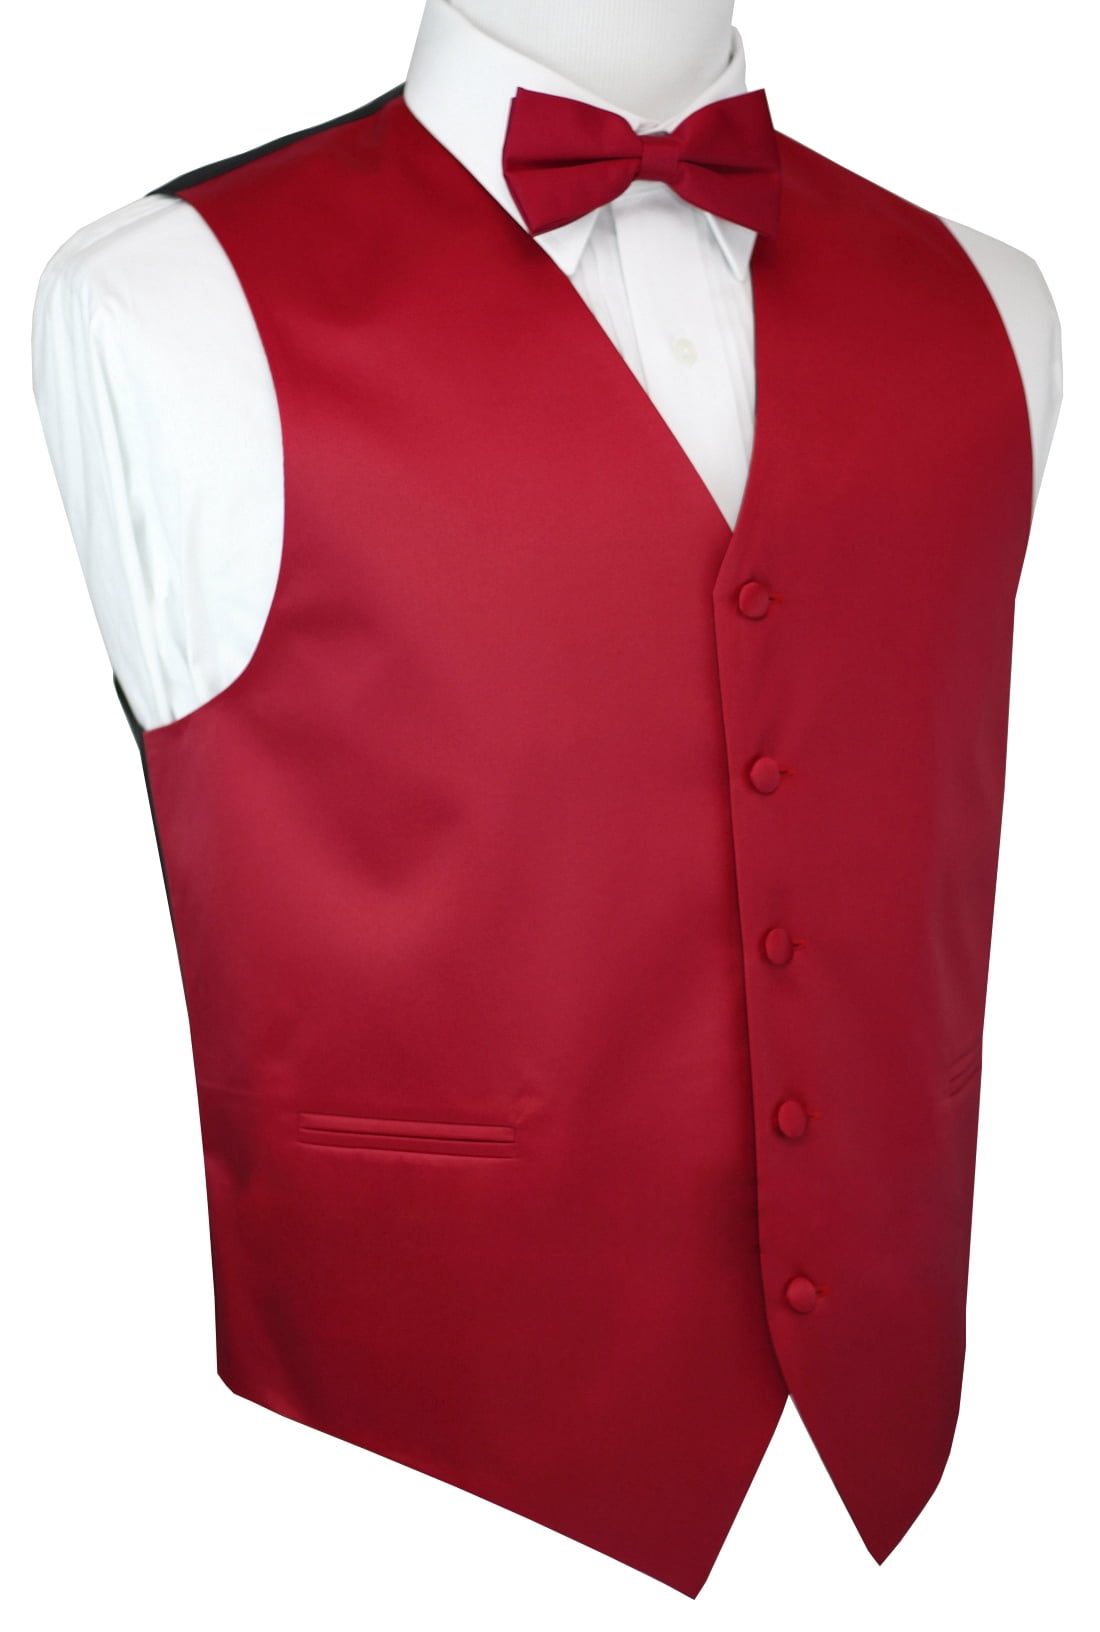 New Men's Tuxedo Vest Waistcoat_Necktie Bowtie& Hankie Set Plaid Red formal 